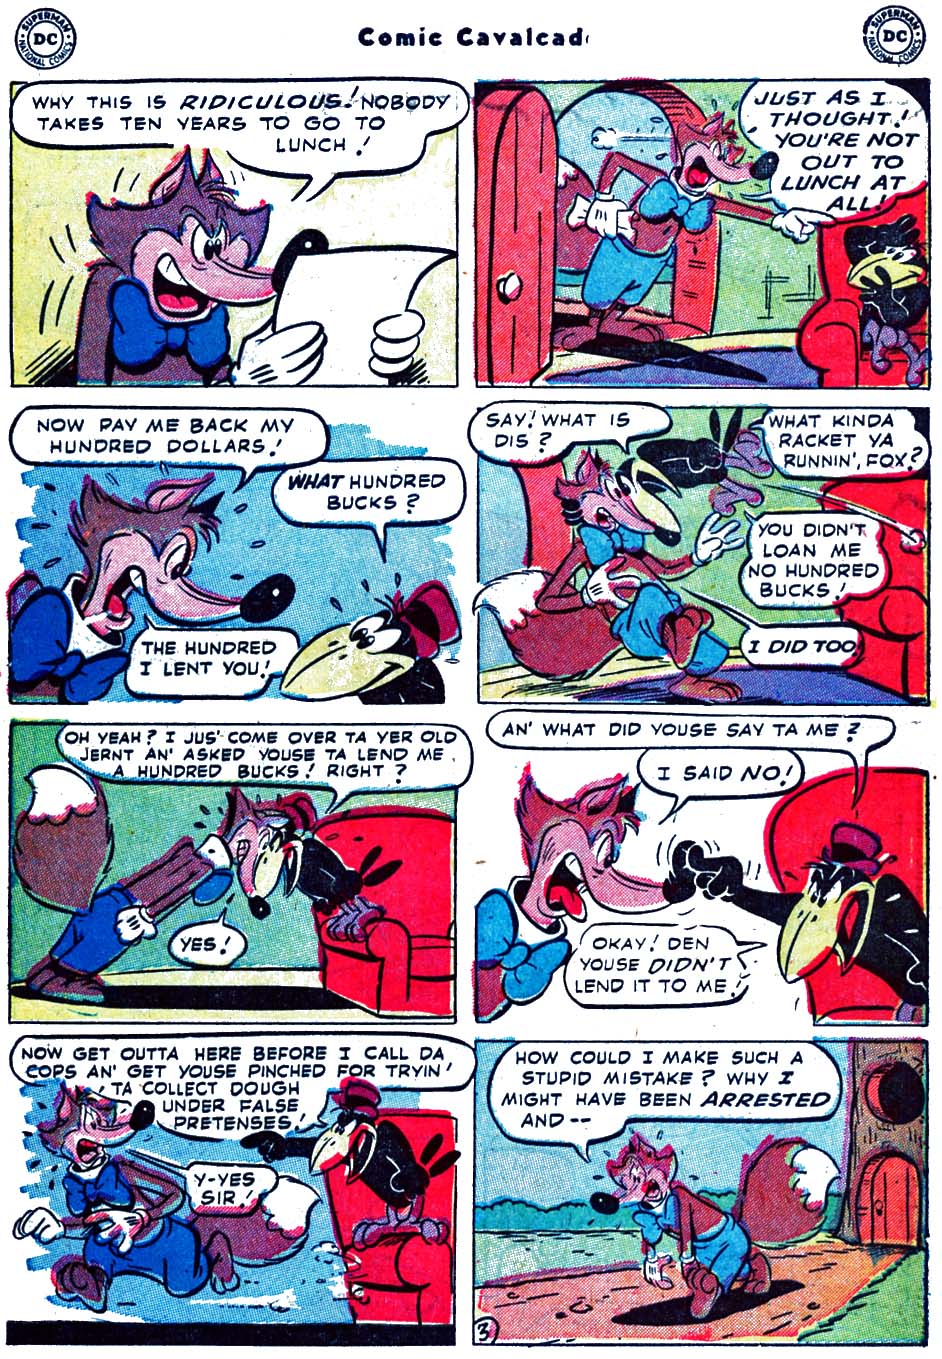 Comic Cavalcade issue 55 - Page 5